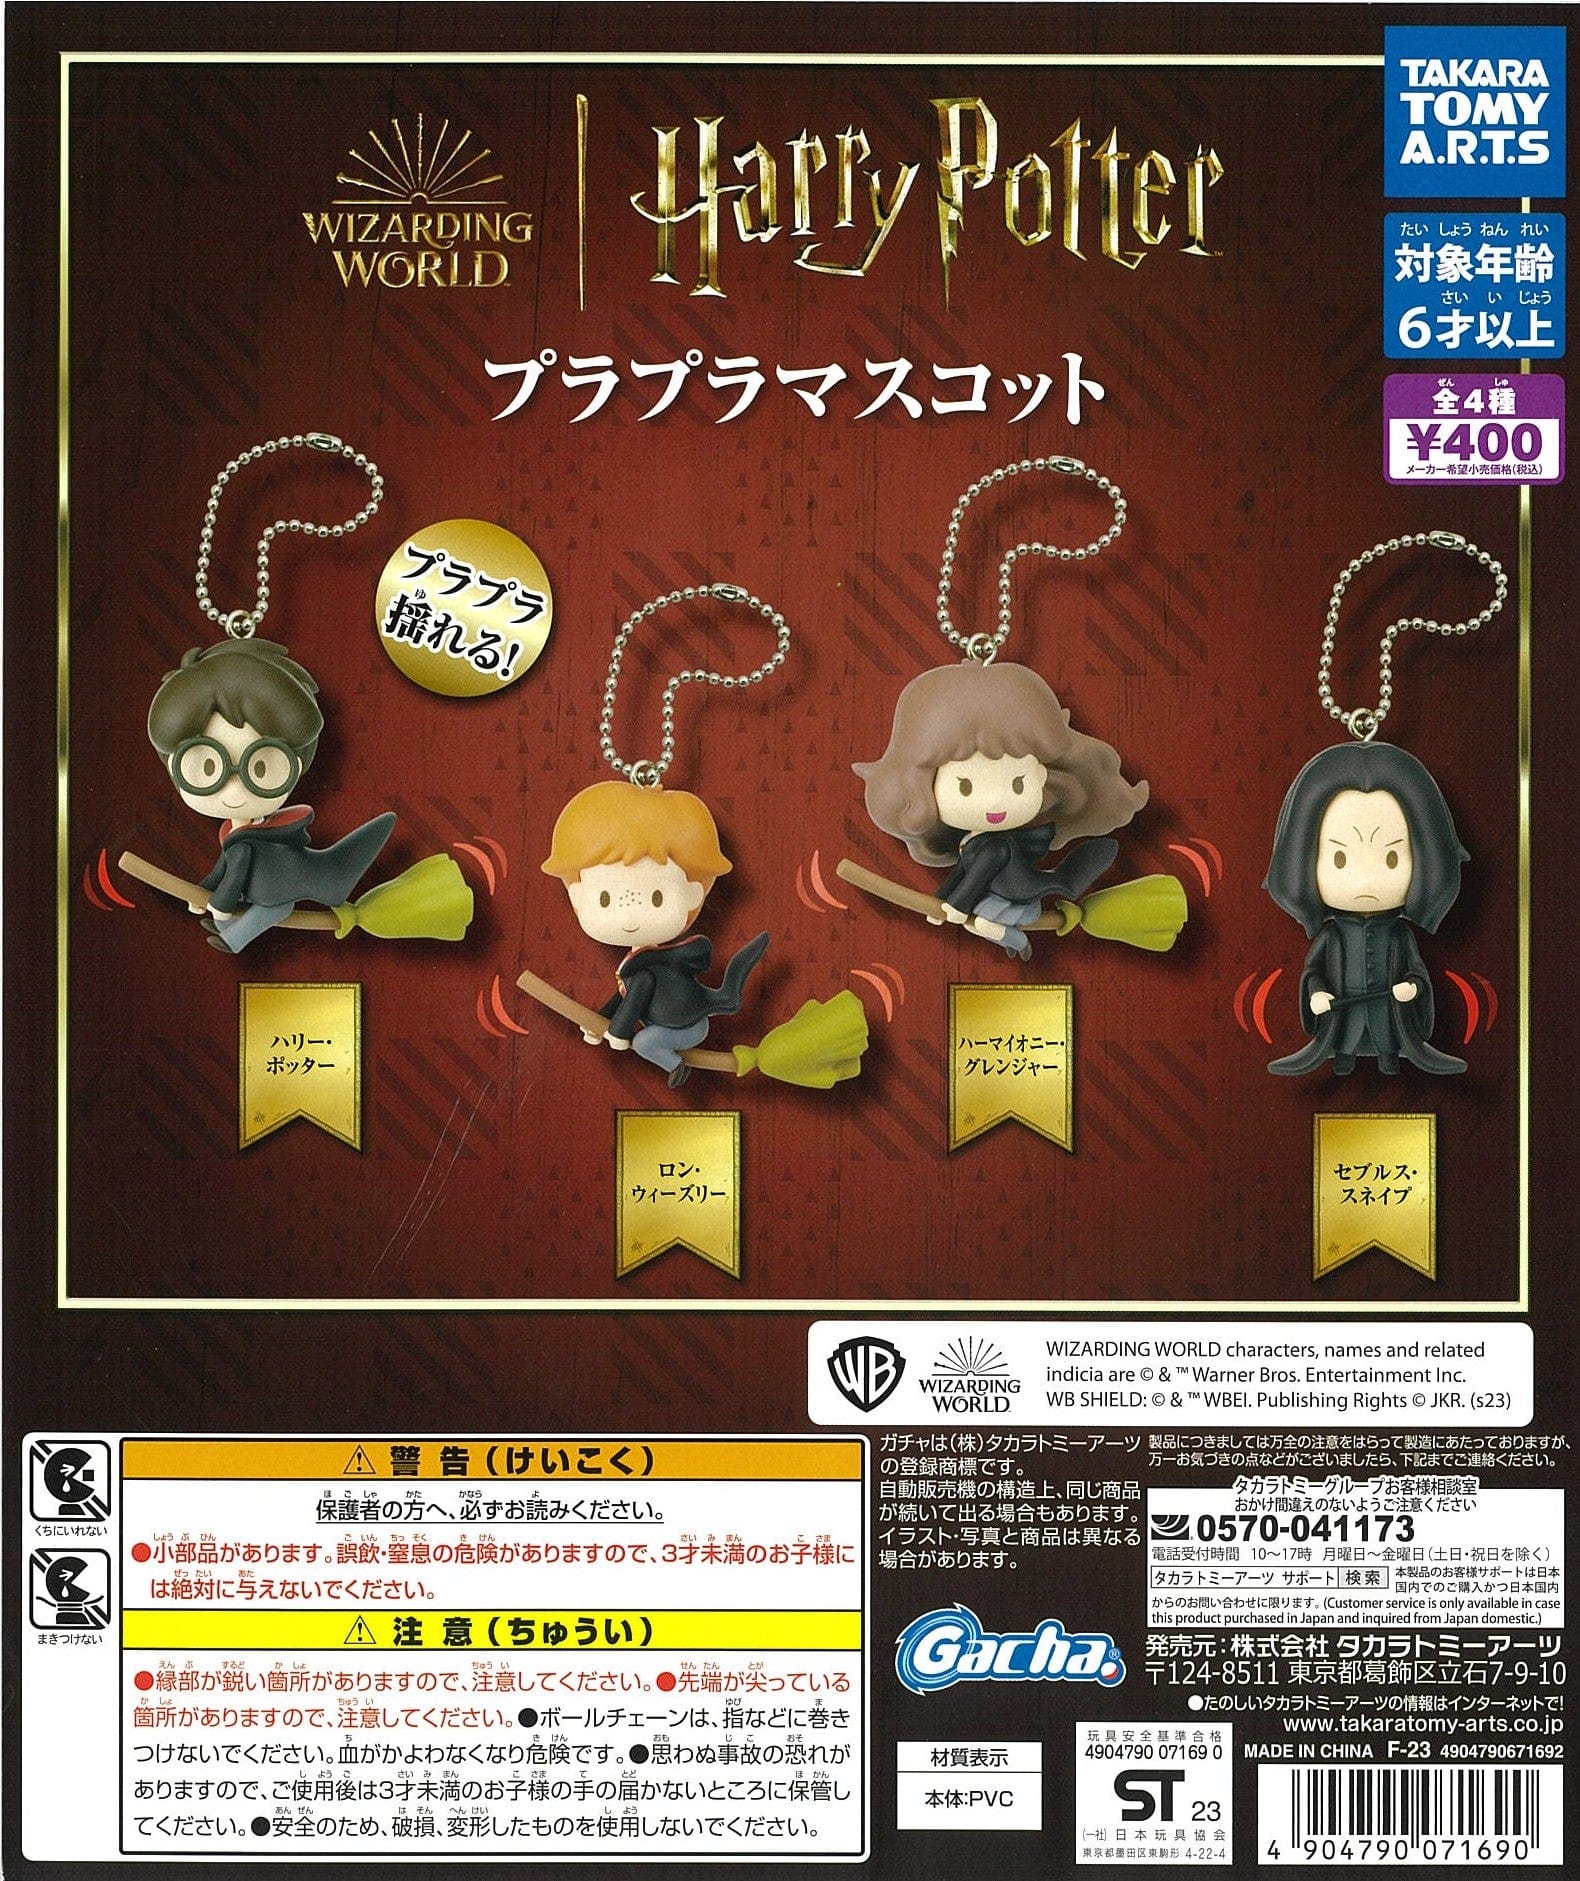 TAKARA TOMY ARTS CP2435 Harry Potter Plapla Mascot